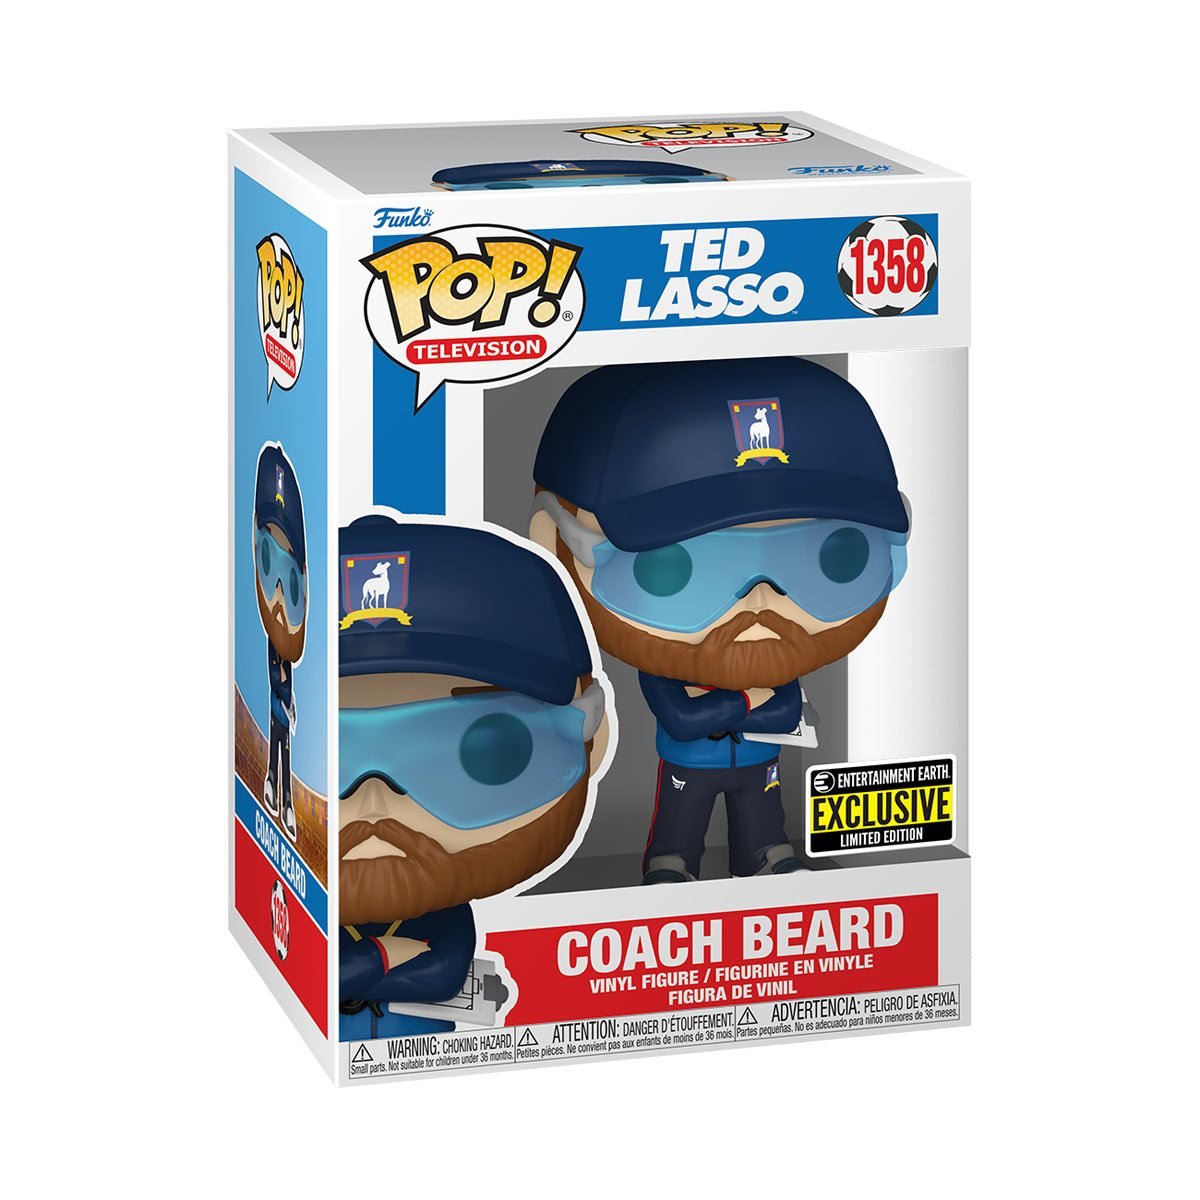 POP! TV Ted Lasso Coach Beard #1358